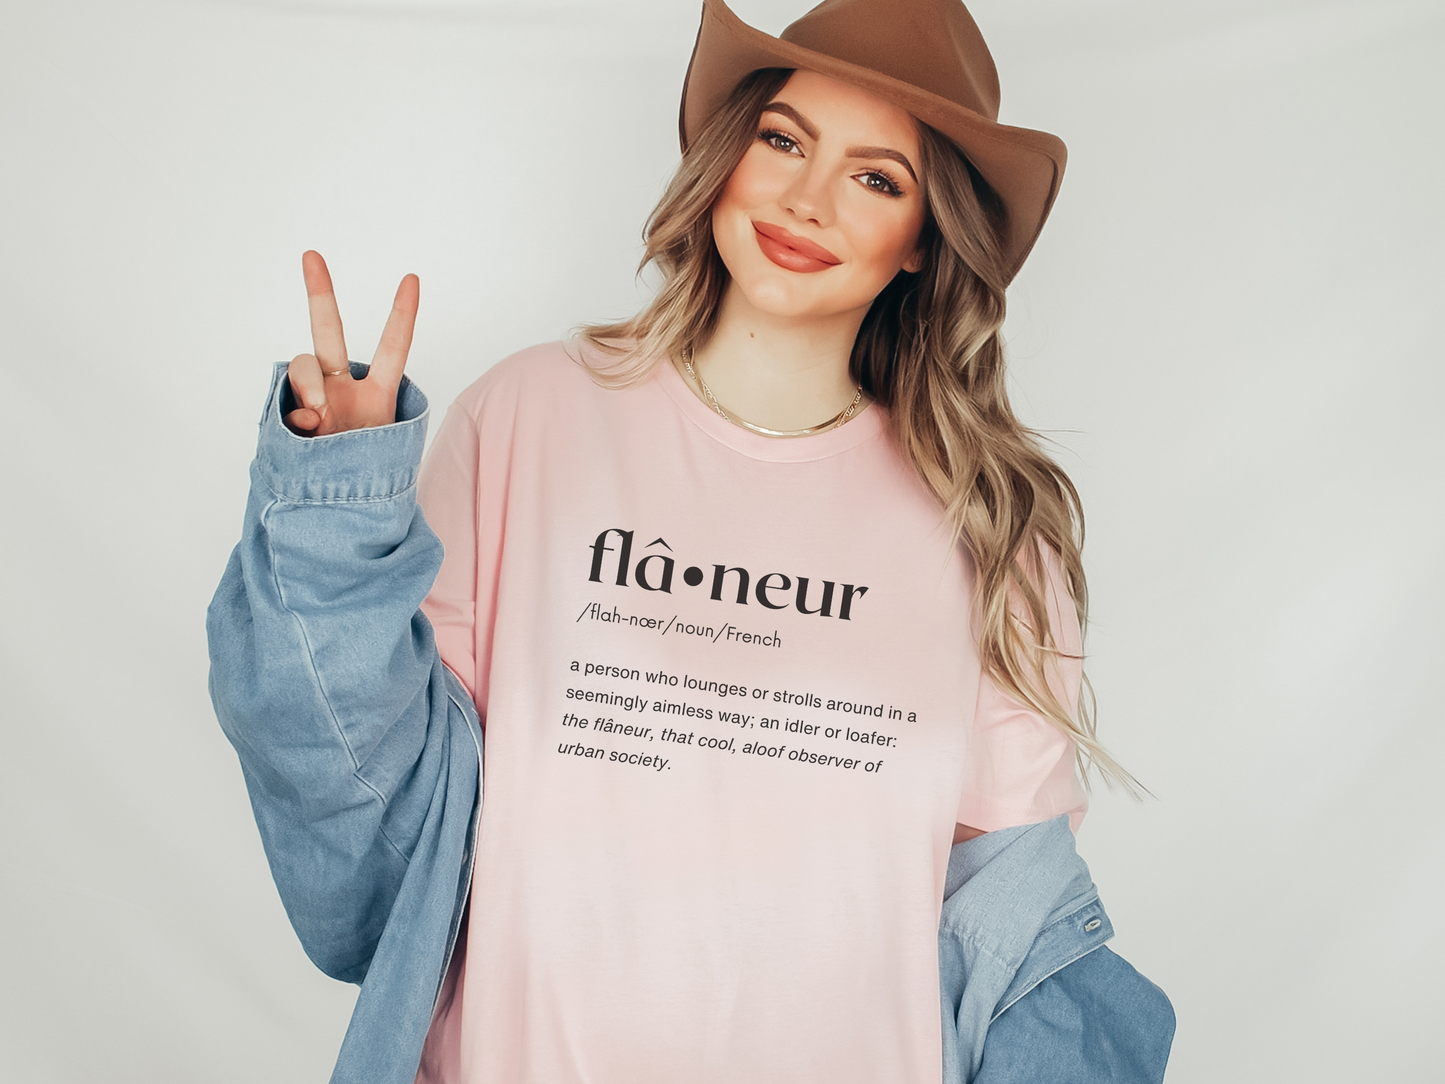 Flâneur "Wanderer" French Word T-Shirt in Pink